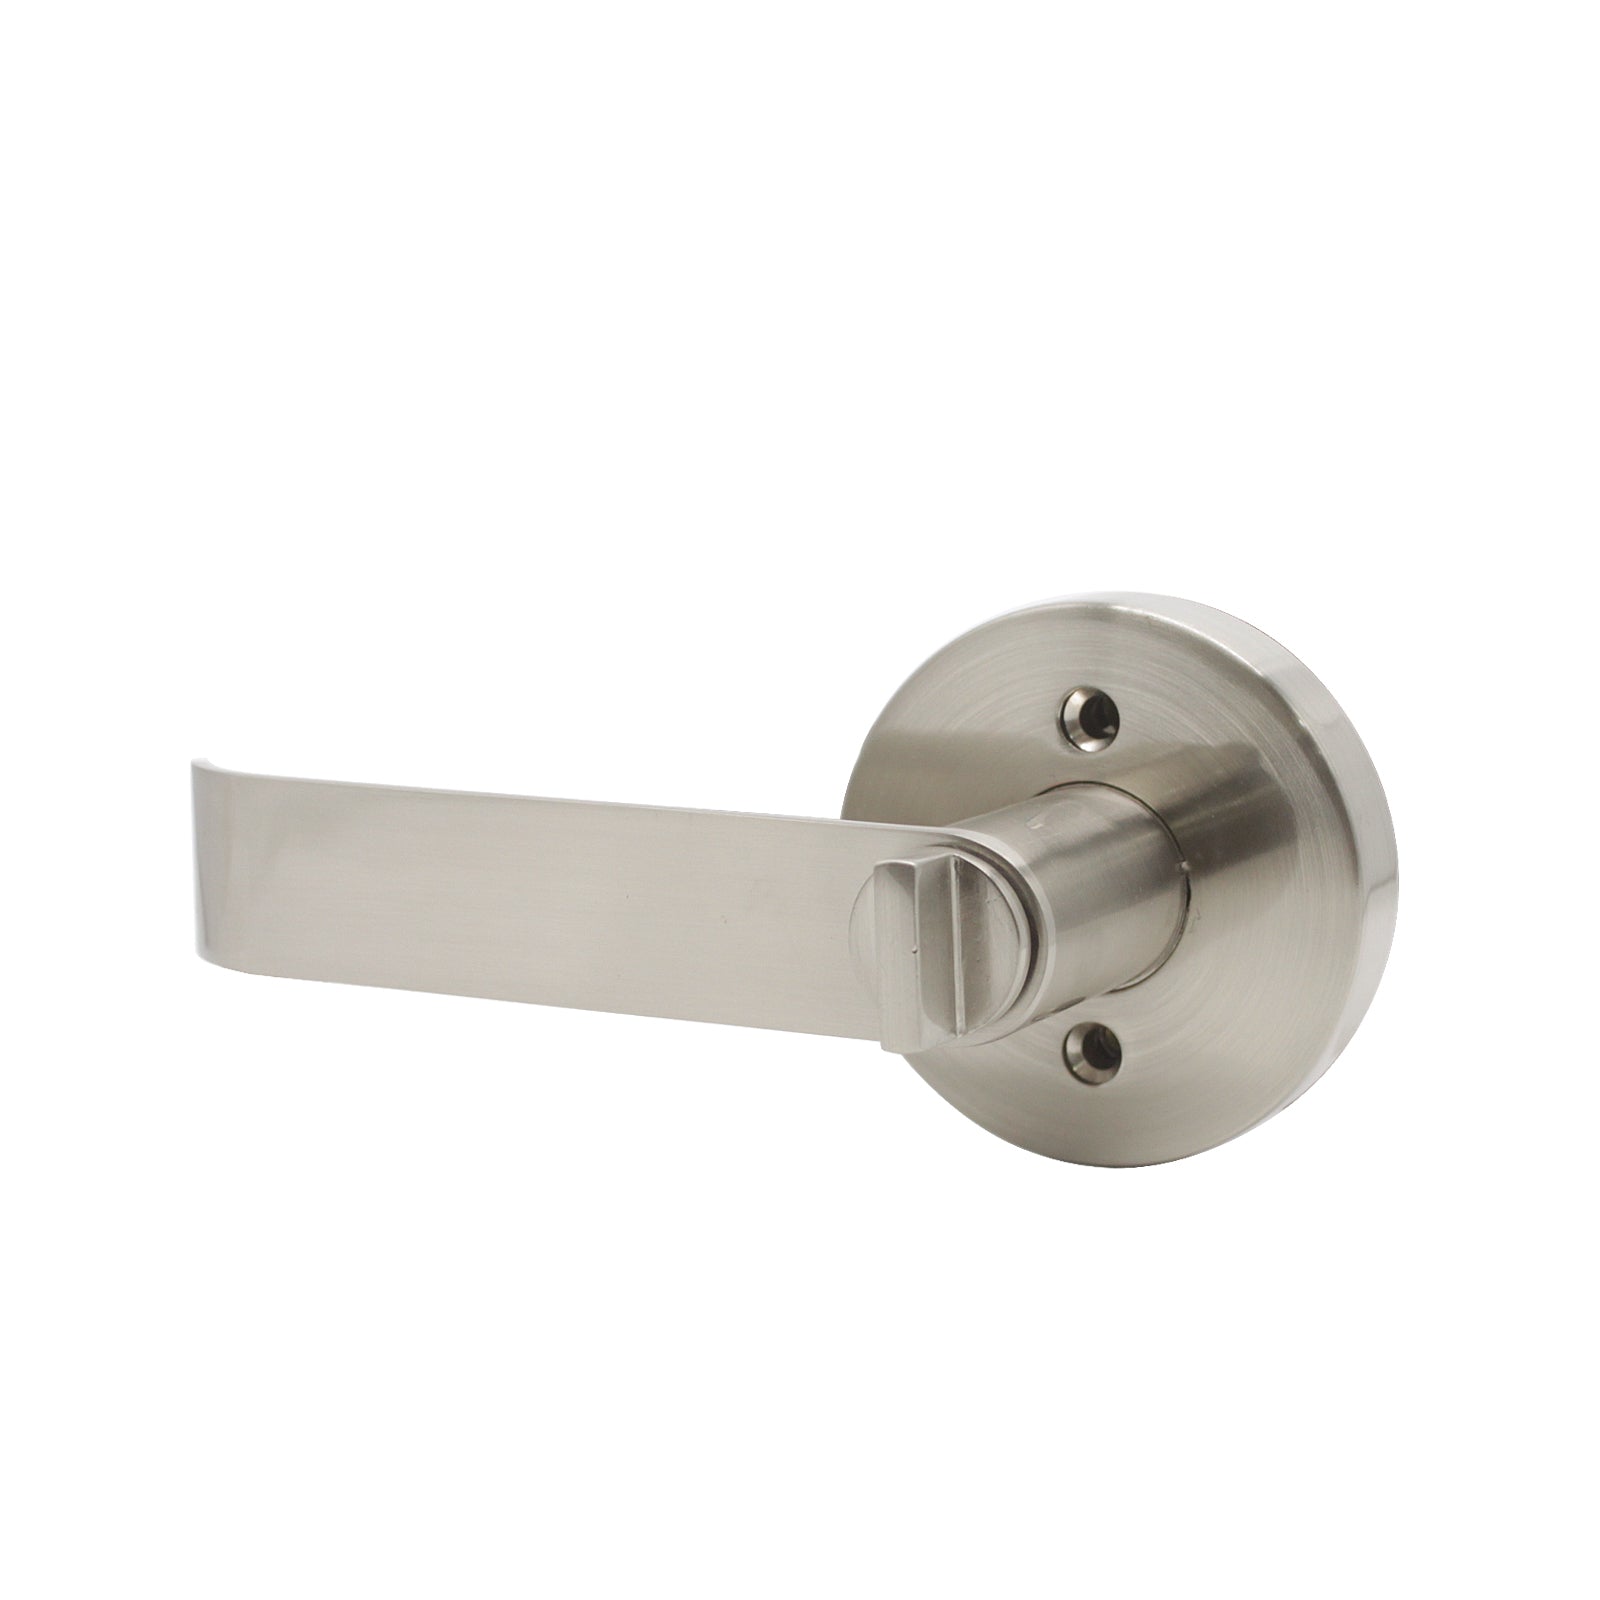 Heavy Duty Entry Keyed Door Lever Lock set Satin Nickel Finish - Keyed Alike DL02SNET